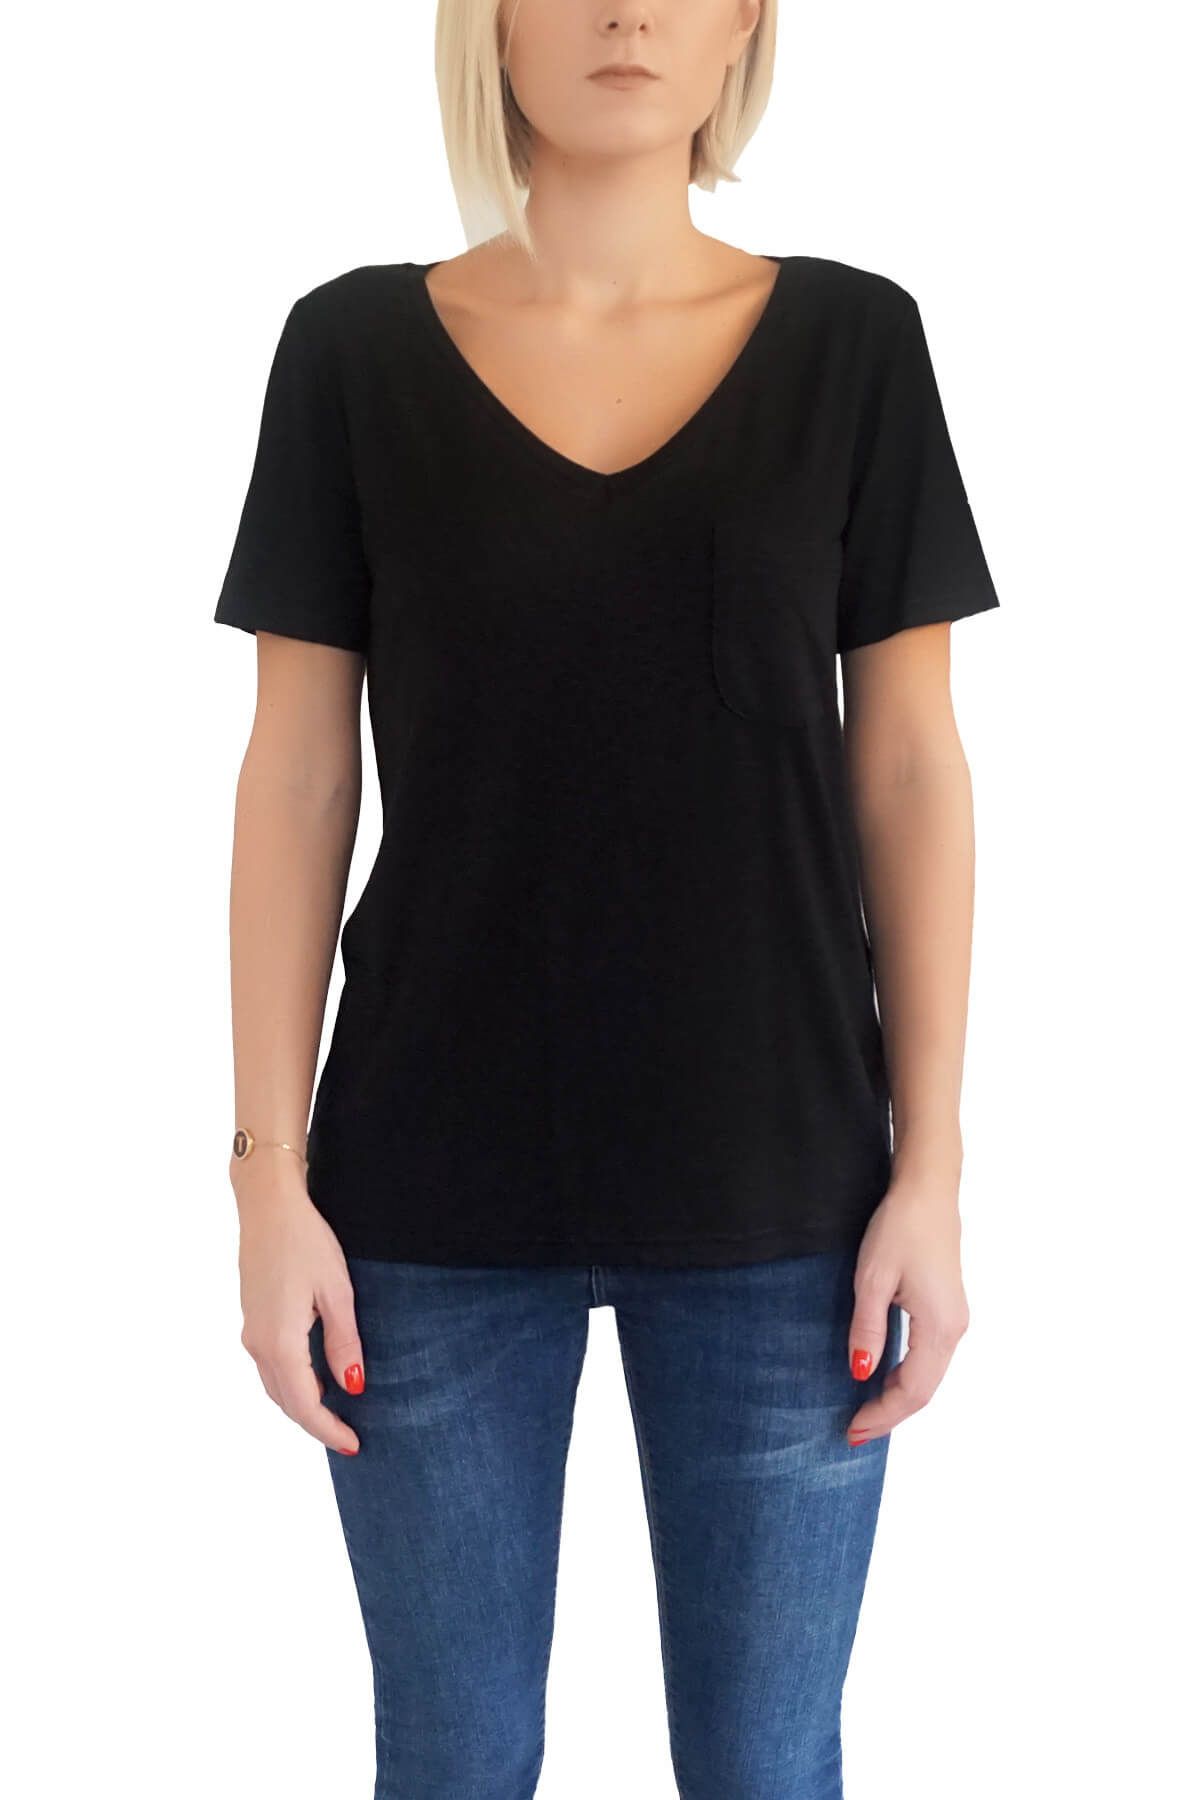 Mof Basics Kadın Siyah T-Shirt VYCT-S